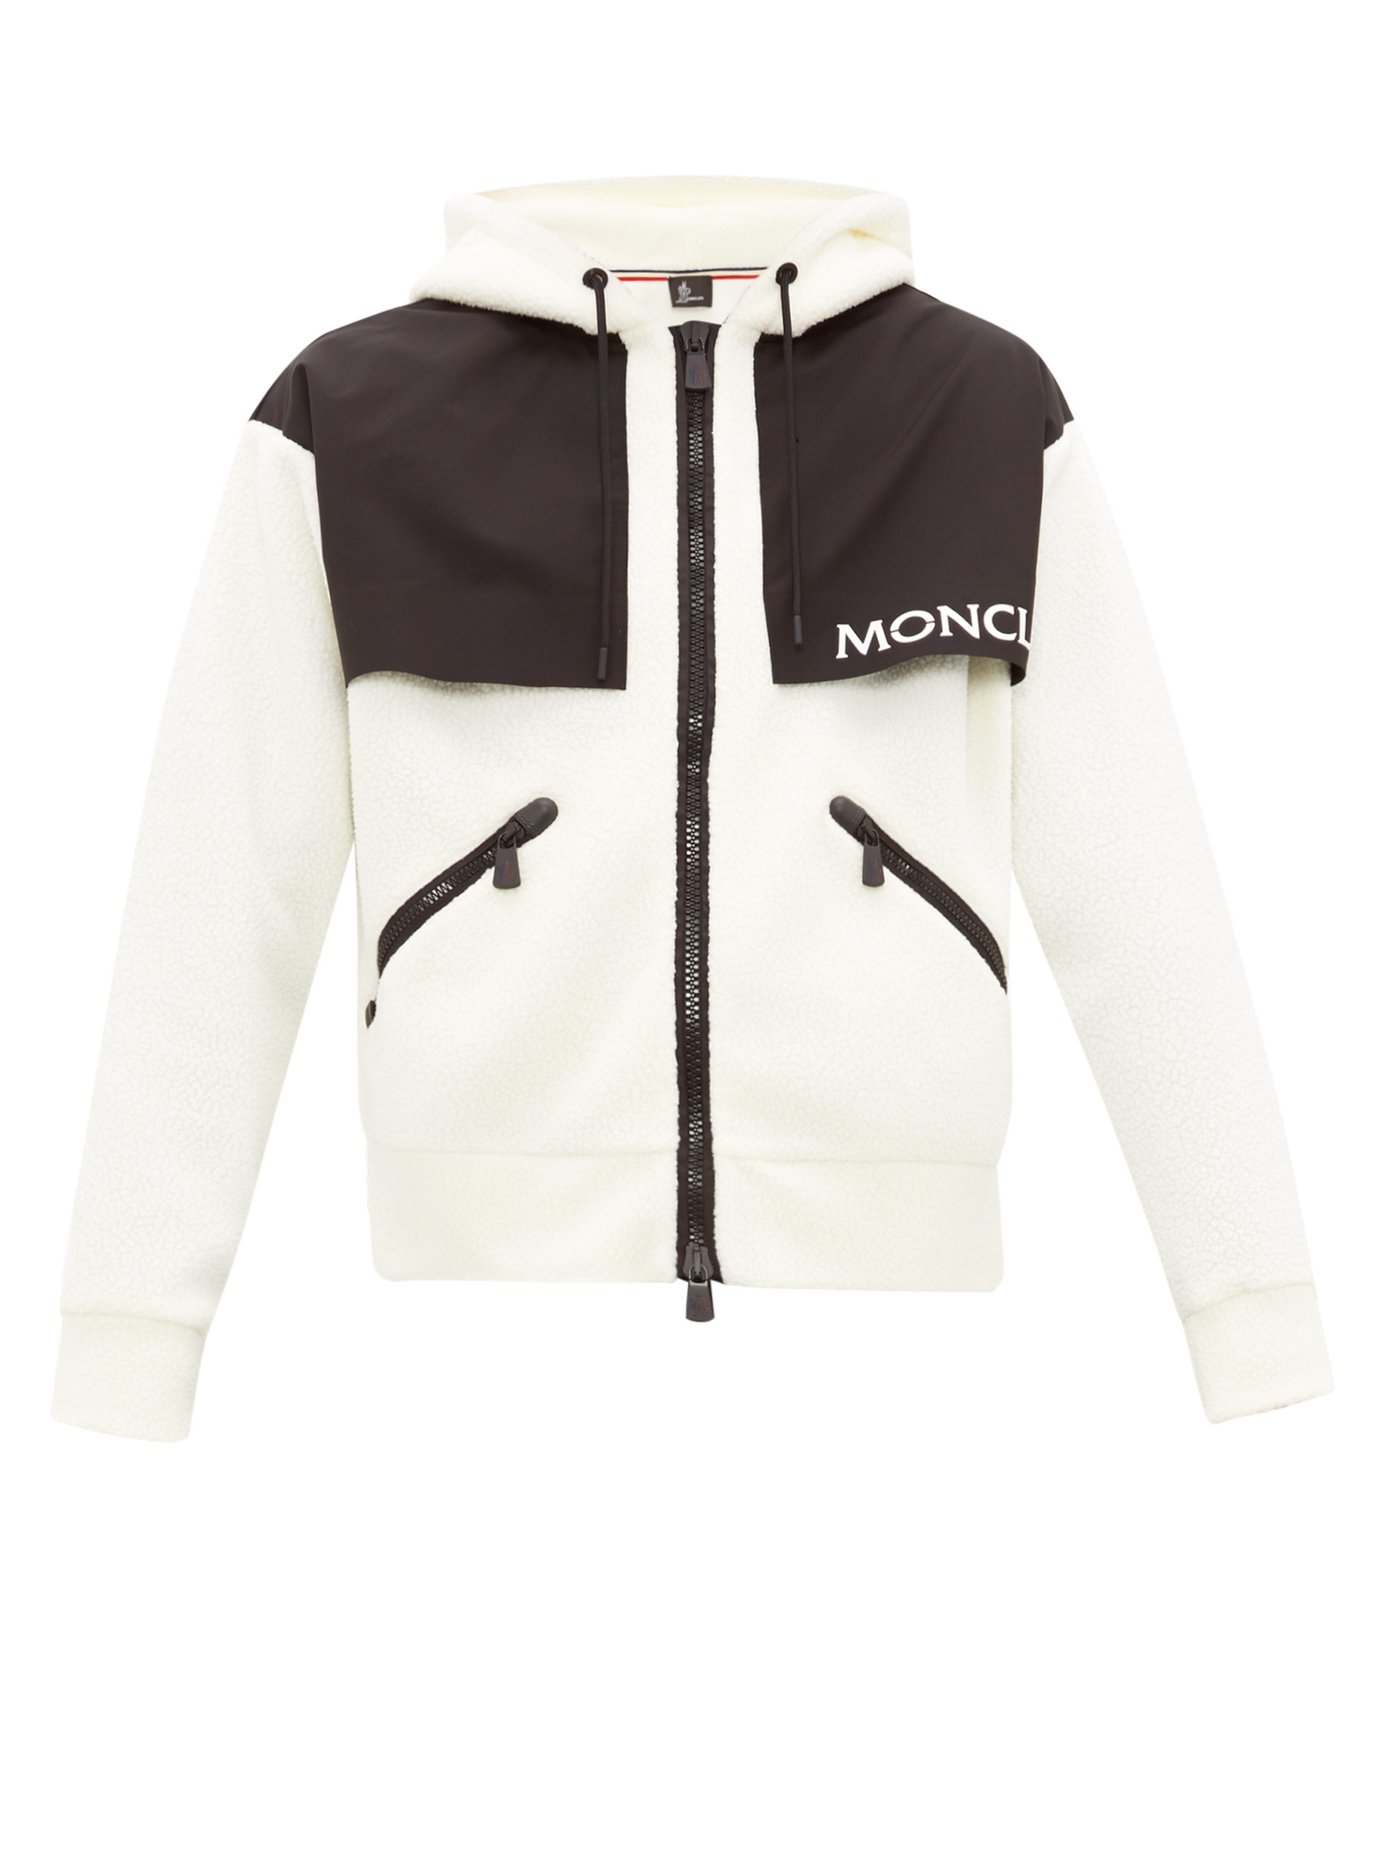 moncler skiing jacket